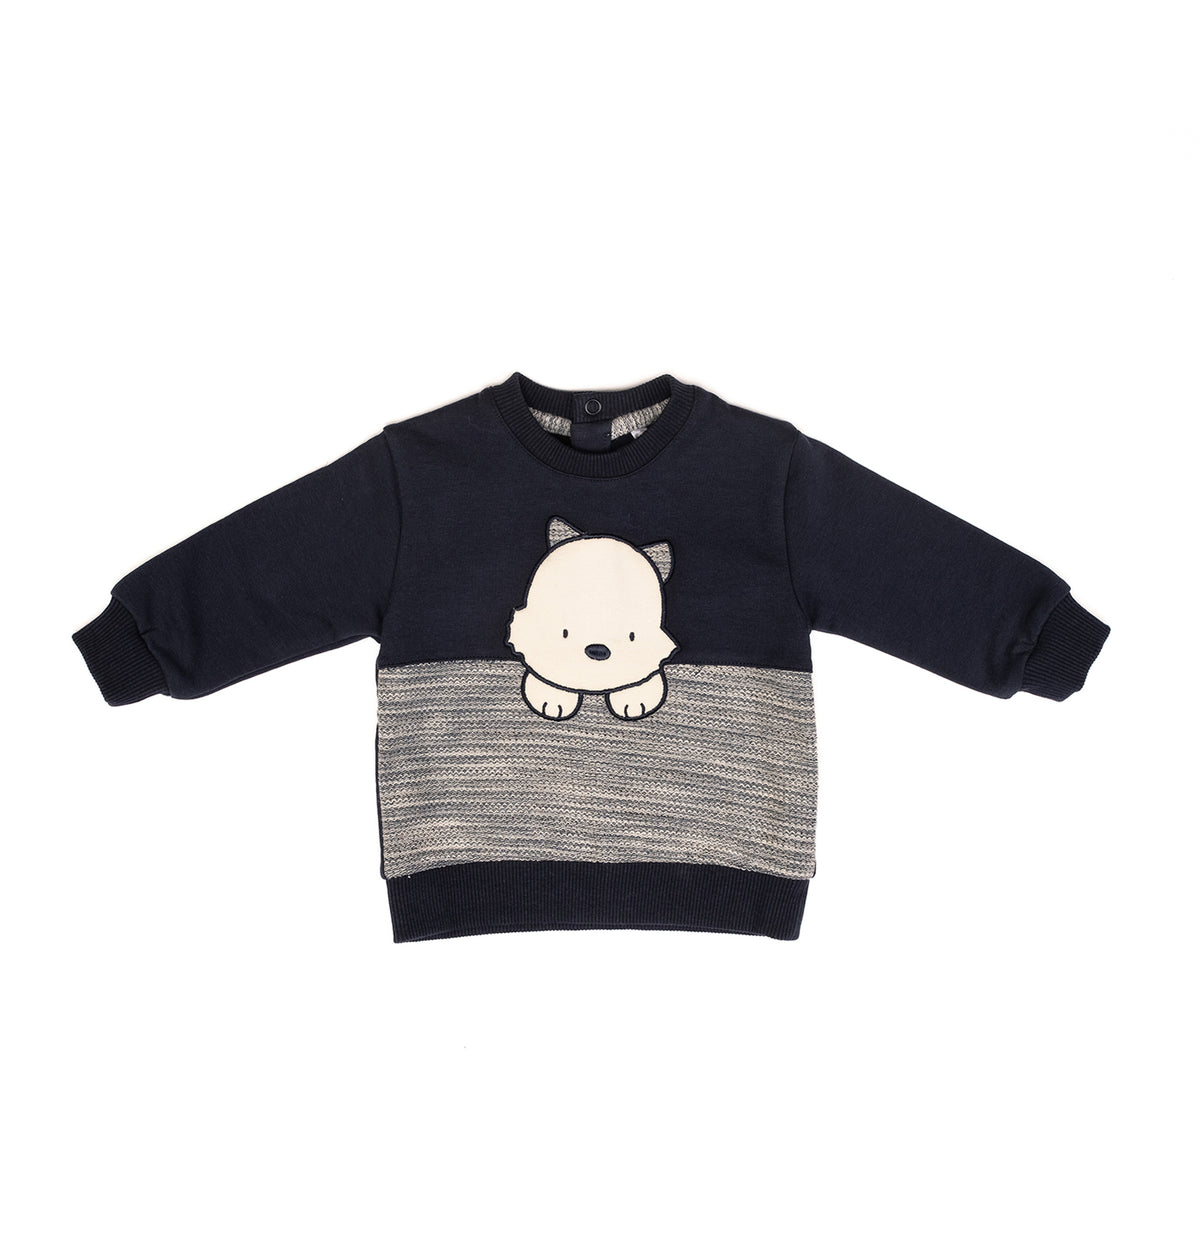 Cool Babyboy doggie sweatshirt by Pompelo